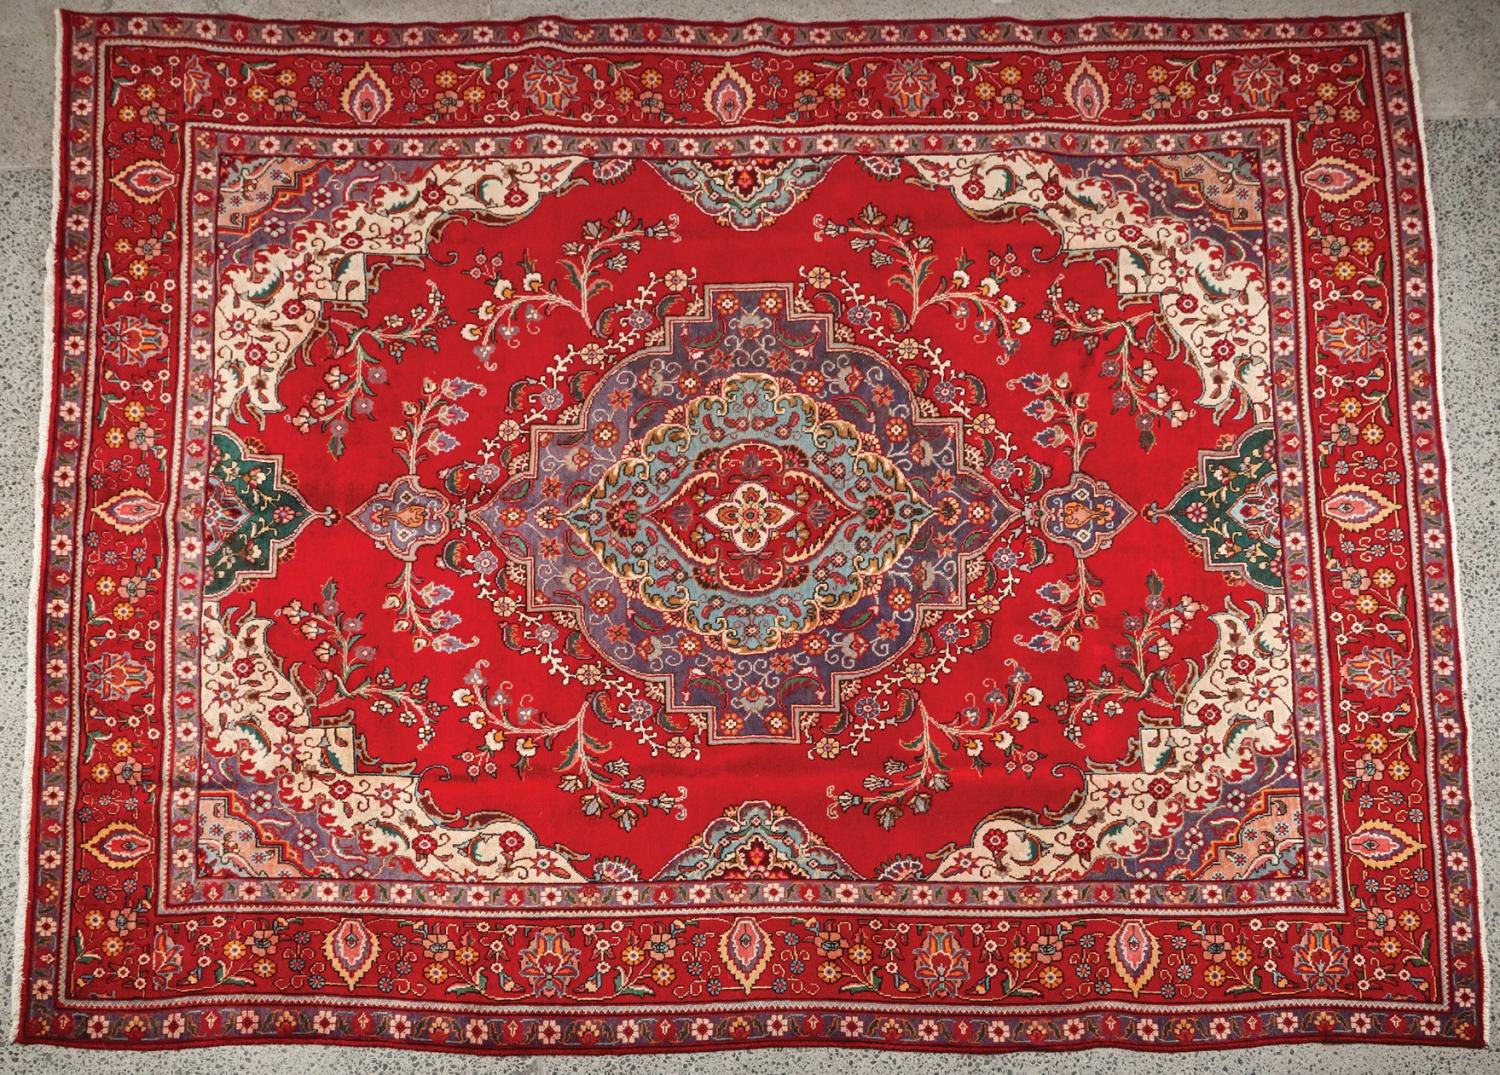 A Large Kashan Persian Carpet - Price Estimate: $1600 - $2400